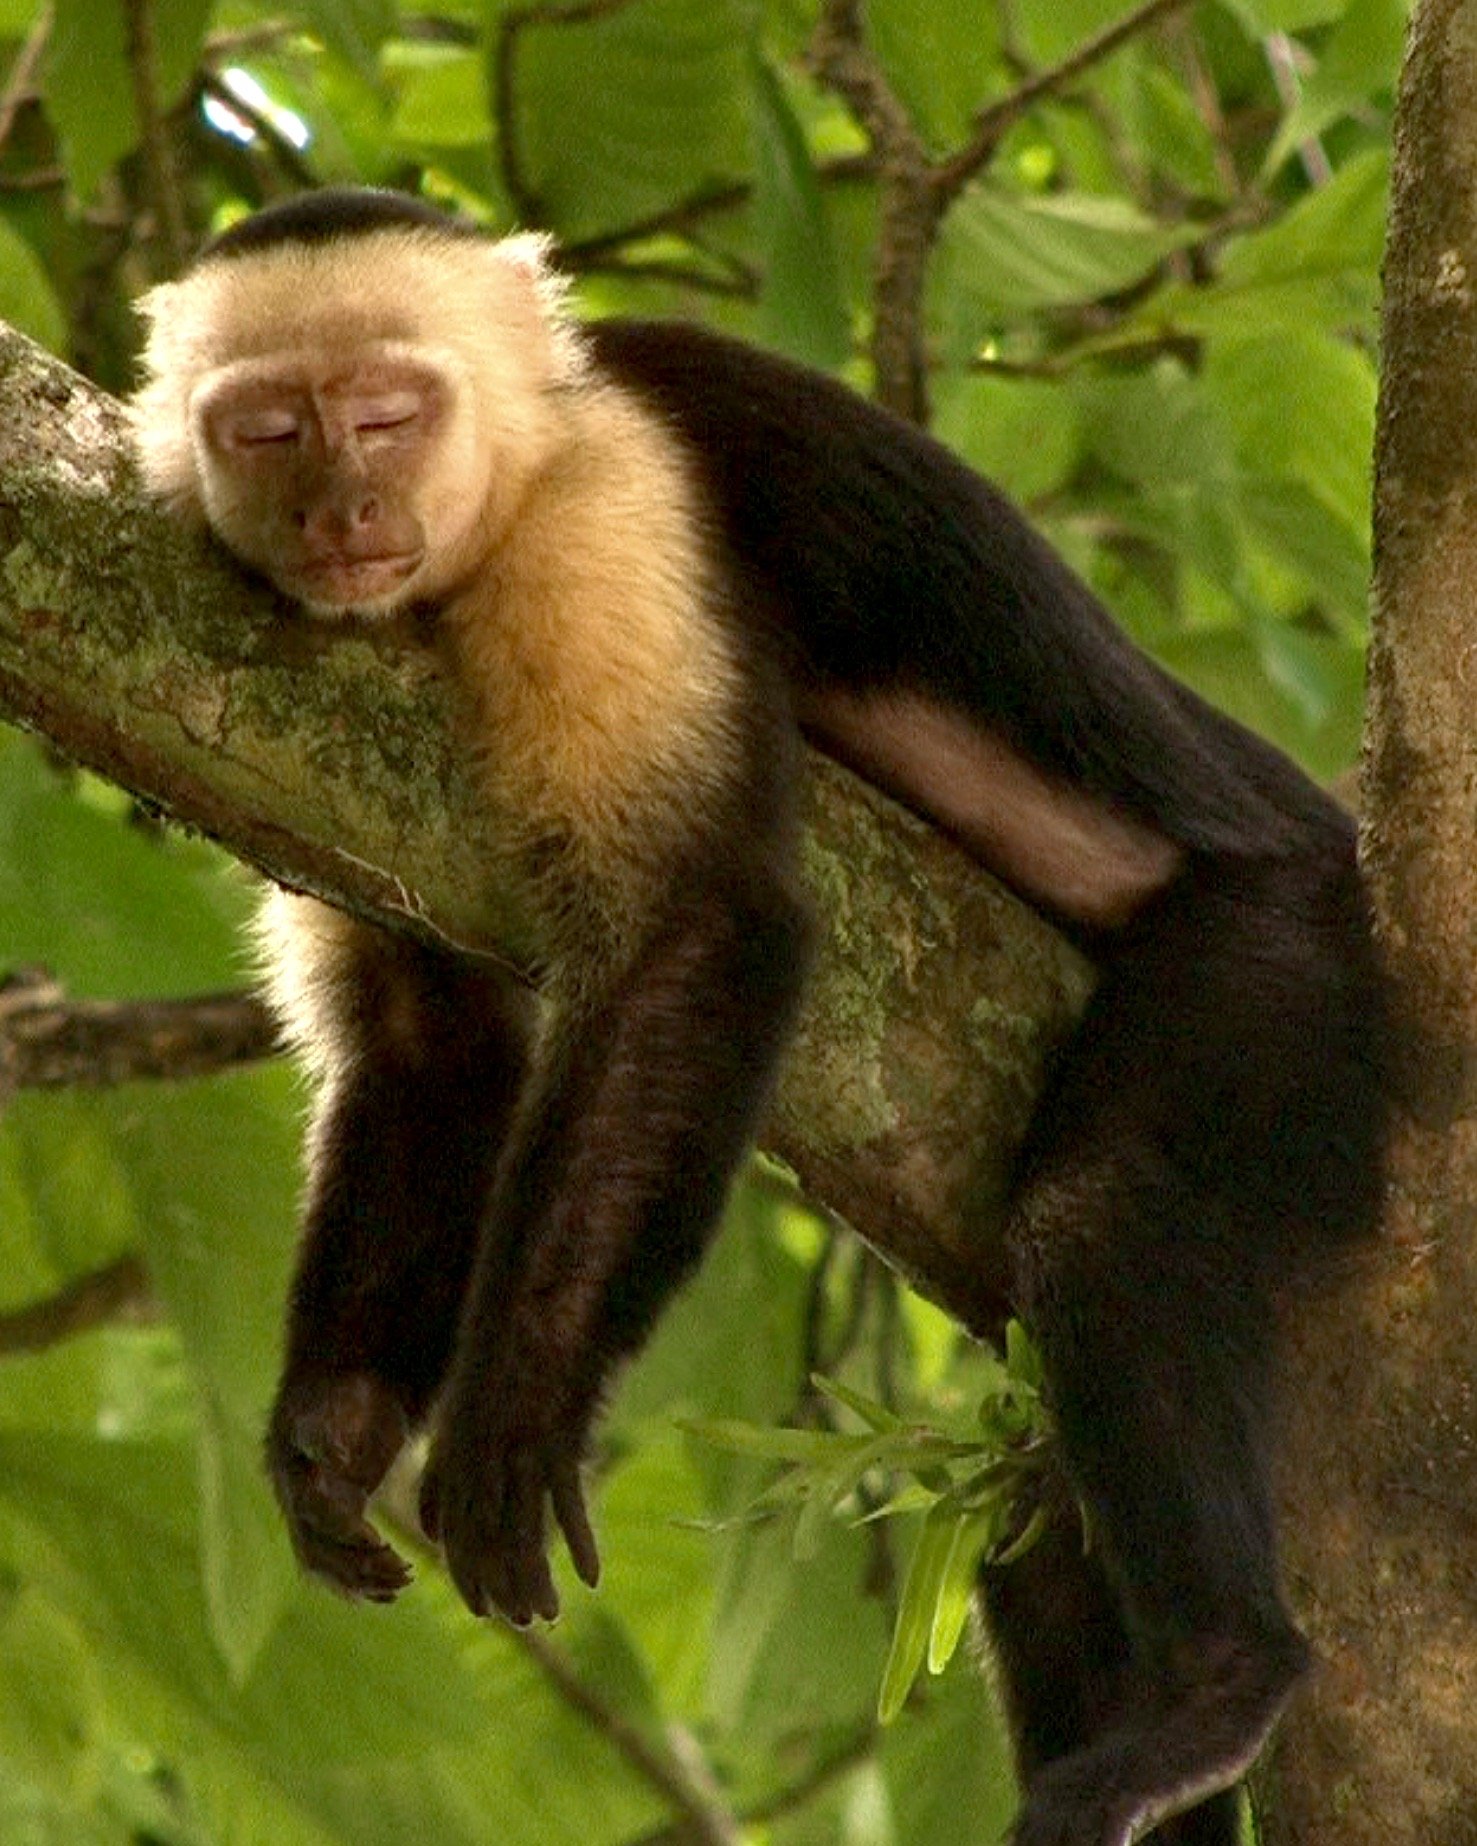 Costa Rica's monkeys